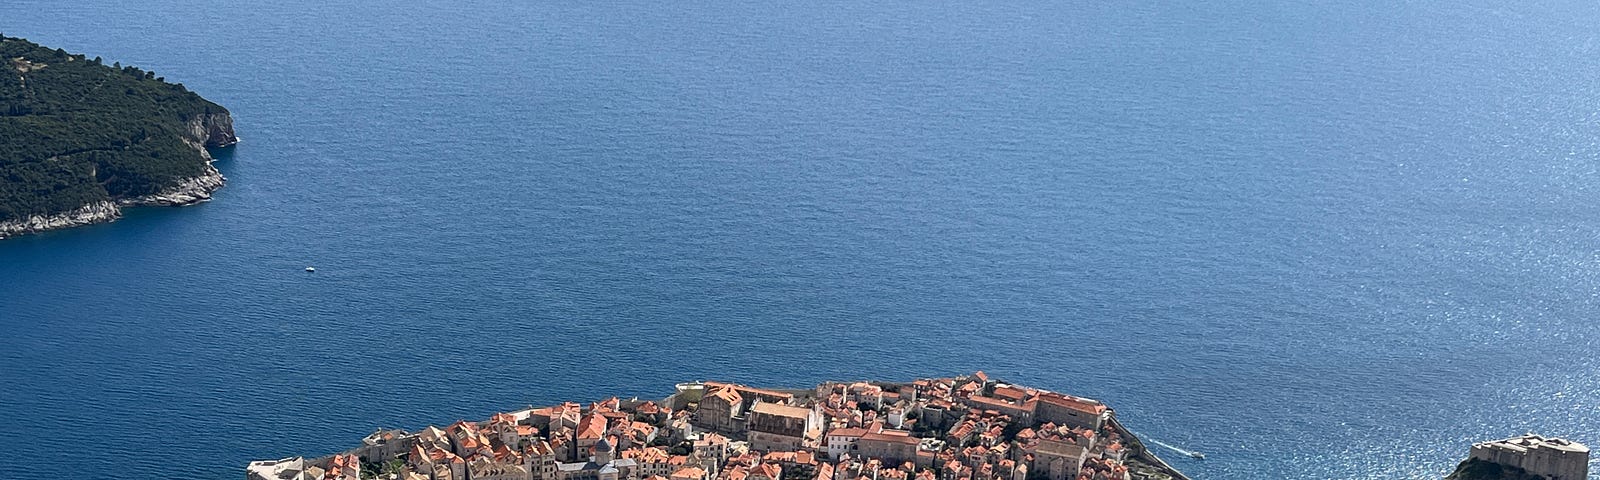 Dubrovnik’s unique lookout to the Adriatic Sea (photo: Author)